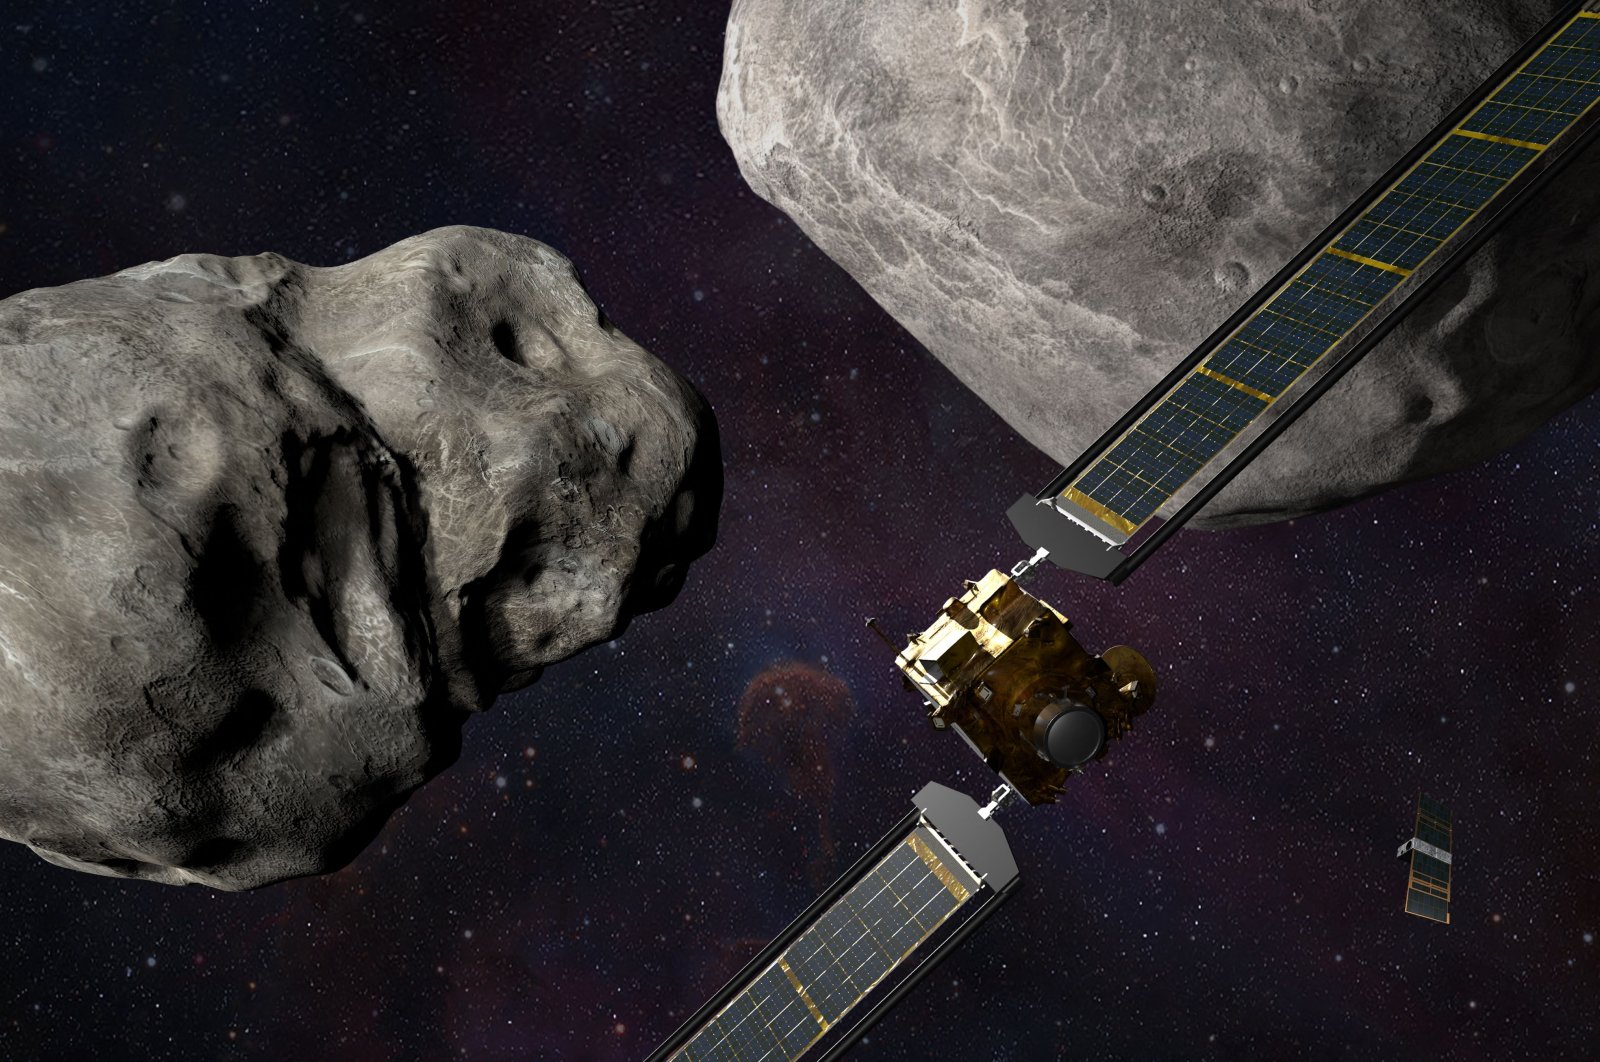 Untuk jaga-jaga: NASA akan menabrakkan pesawat ruang angkasa ke asteroid untuk diuji